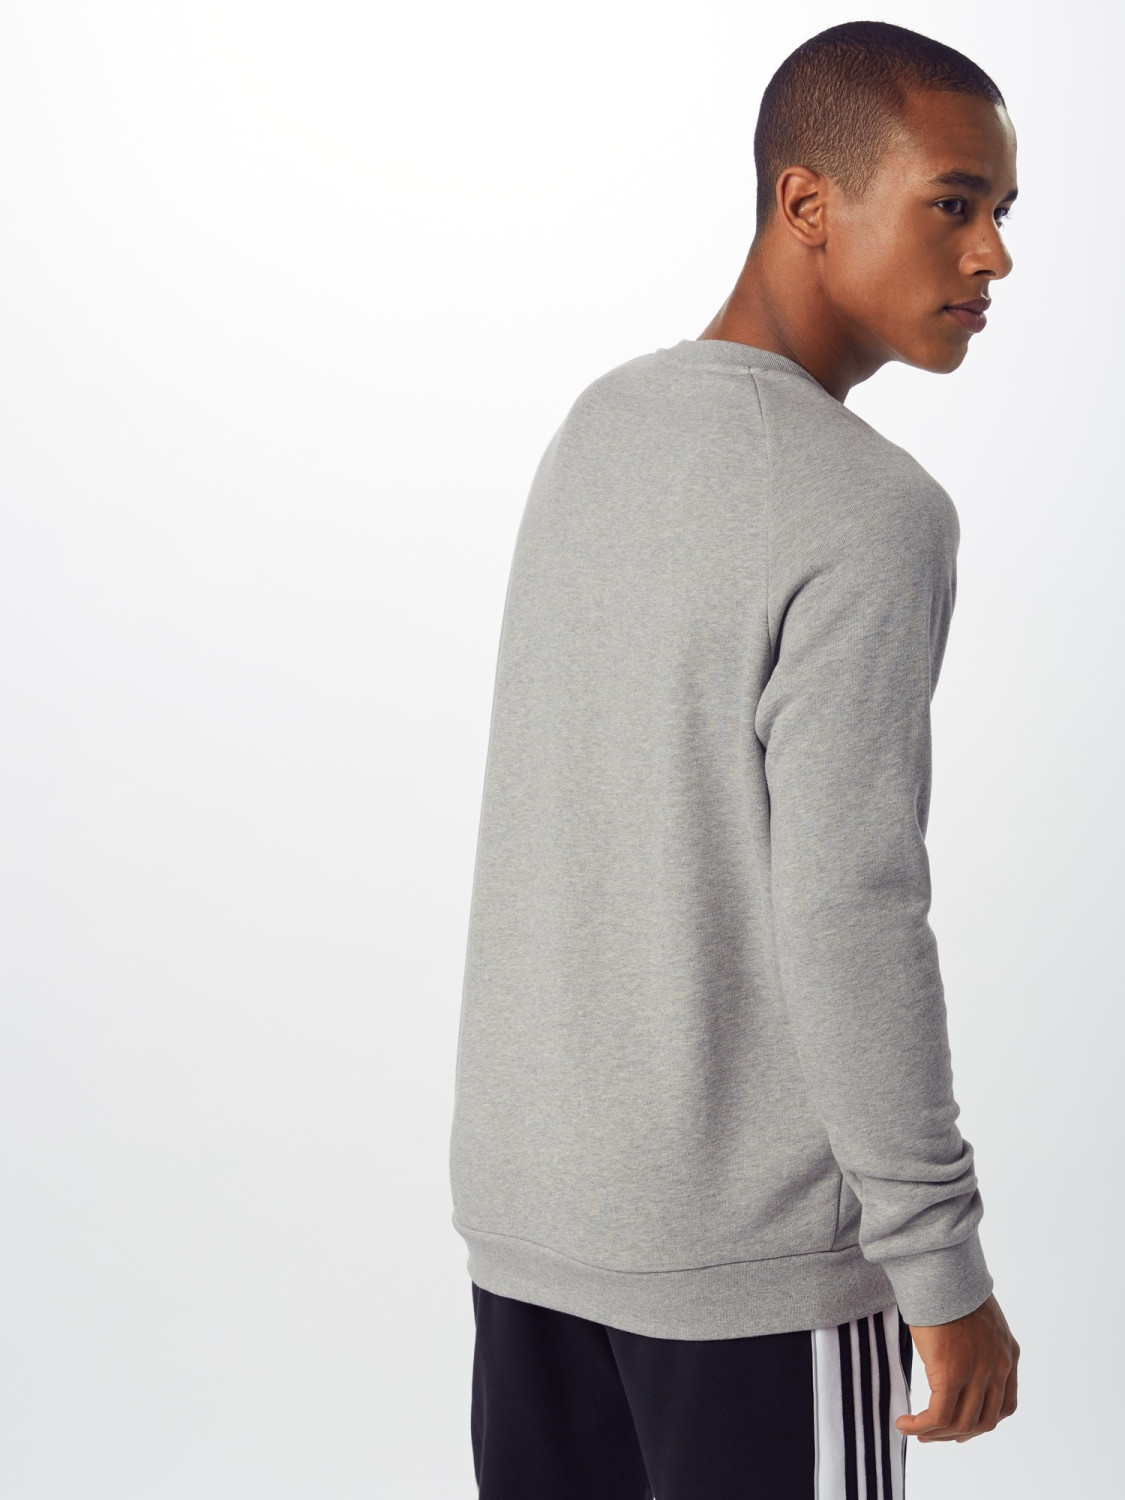 ab bei Preisvergleich Trefoil grey | 49,99 Sweatshirt medium heather Essentials LOUNGEWEAR € Adidas